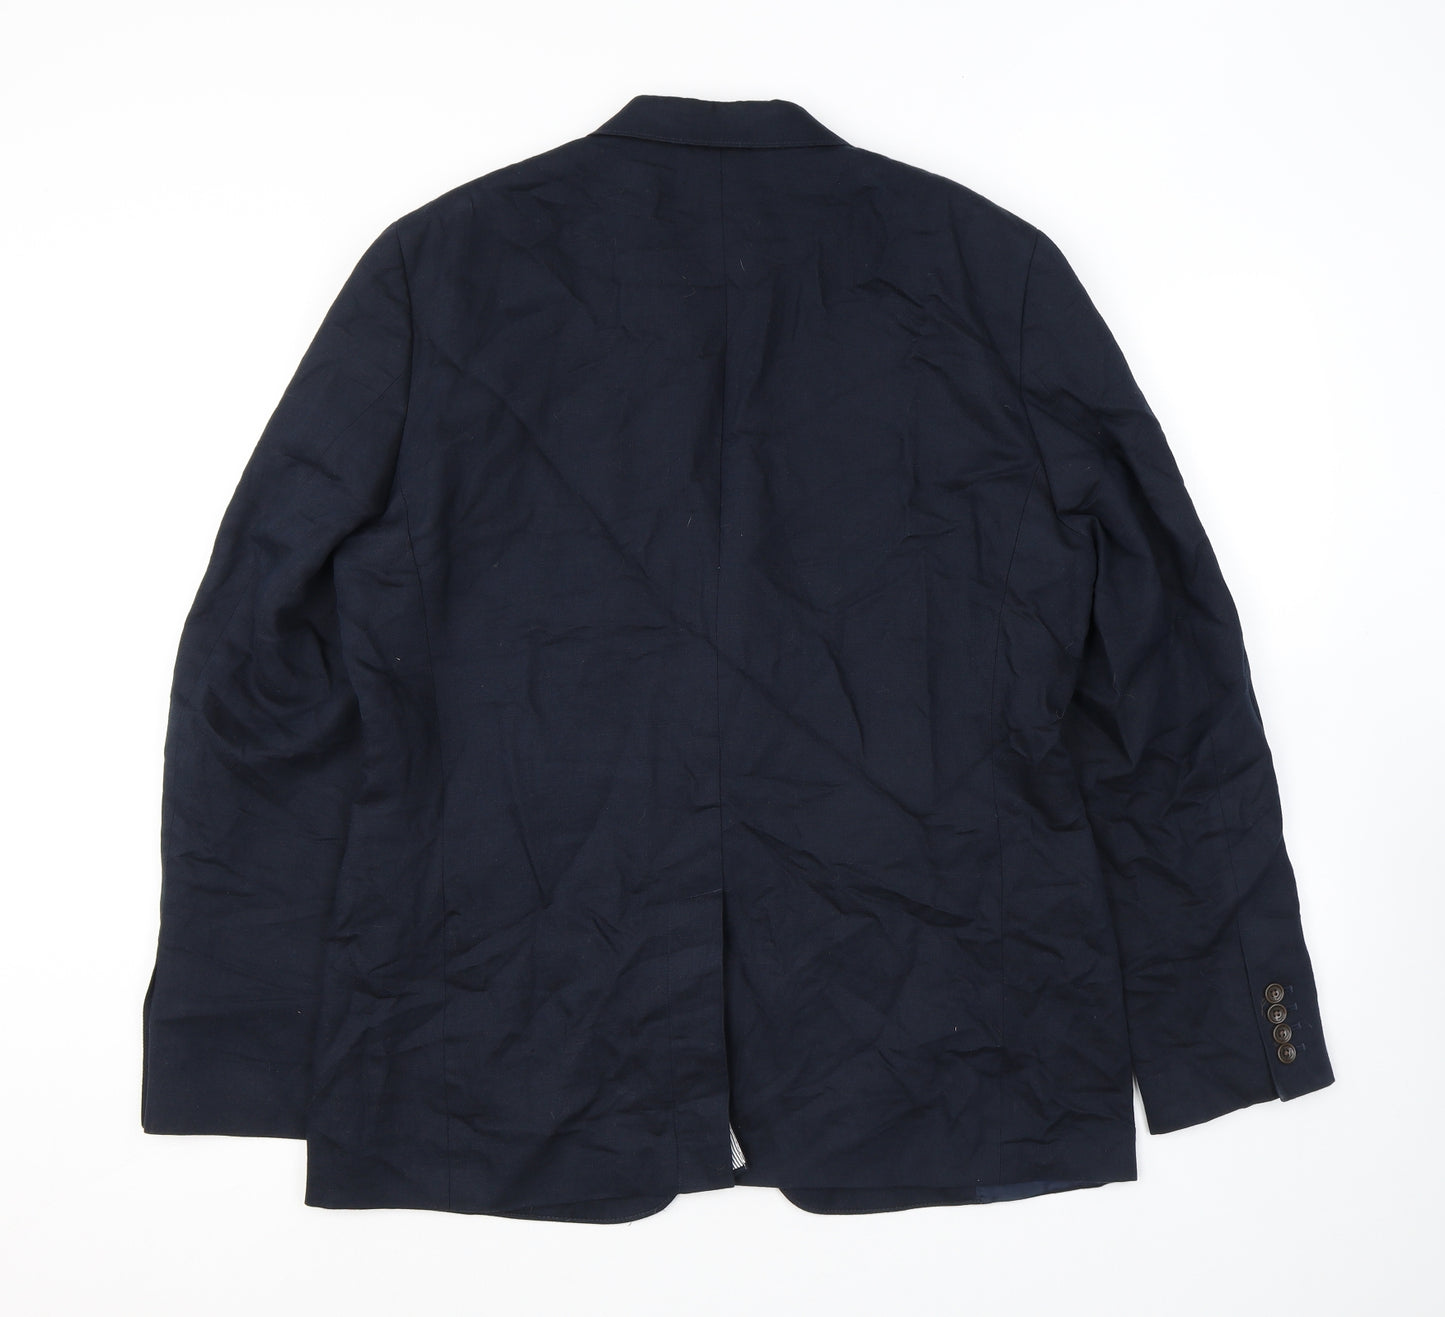 Crew Clothing Mens Blue Linen Jacket Suit Jacket Size 44 Regular